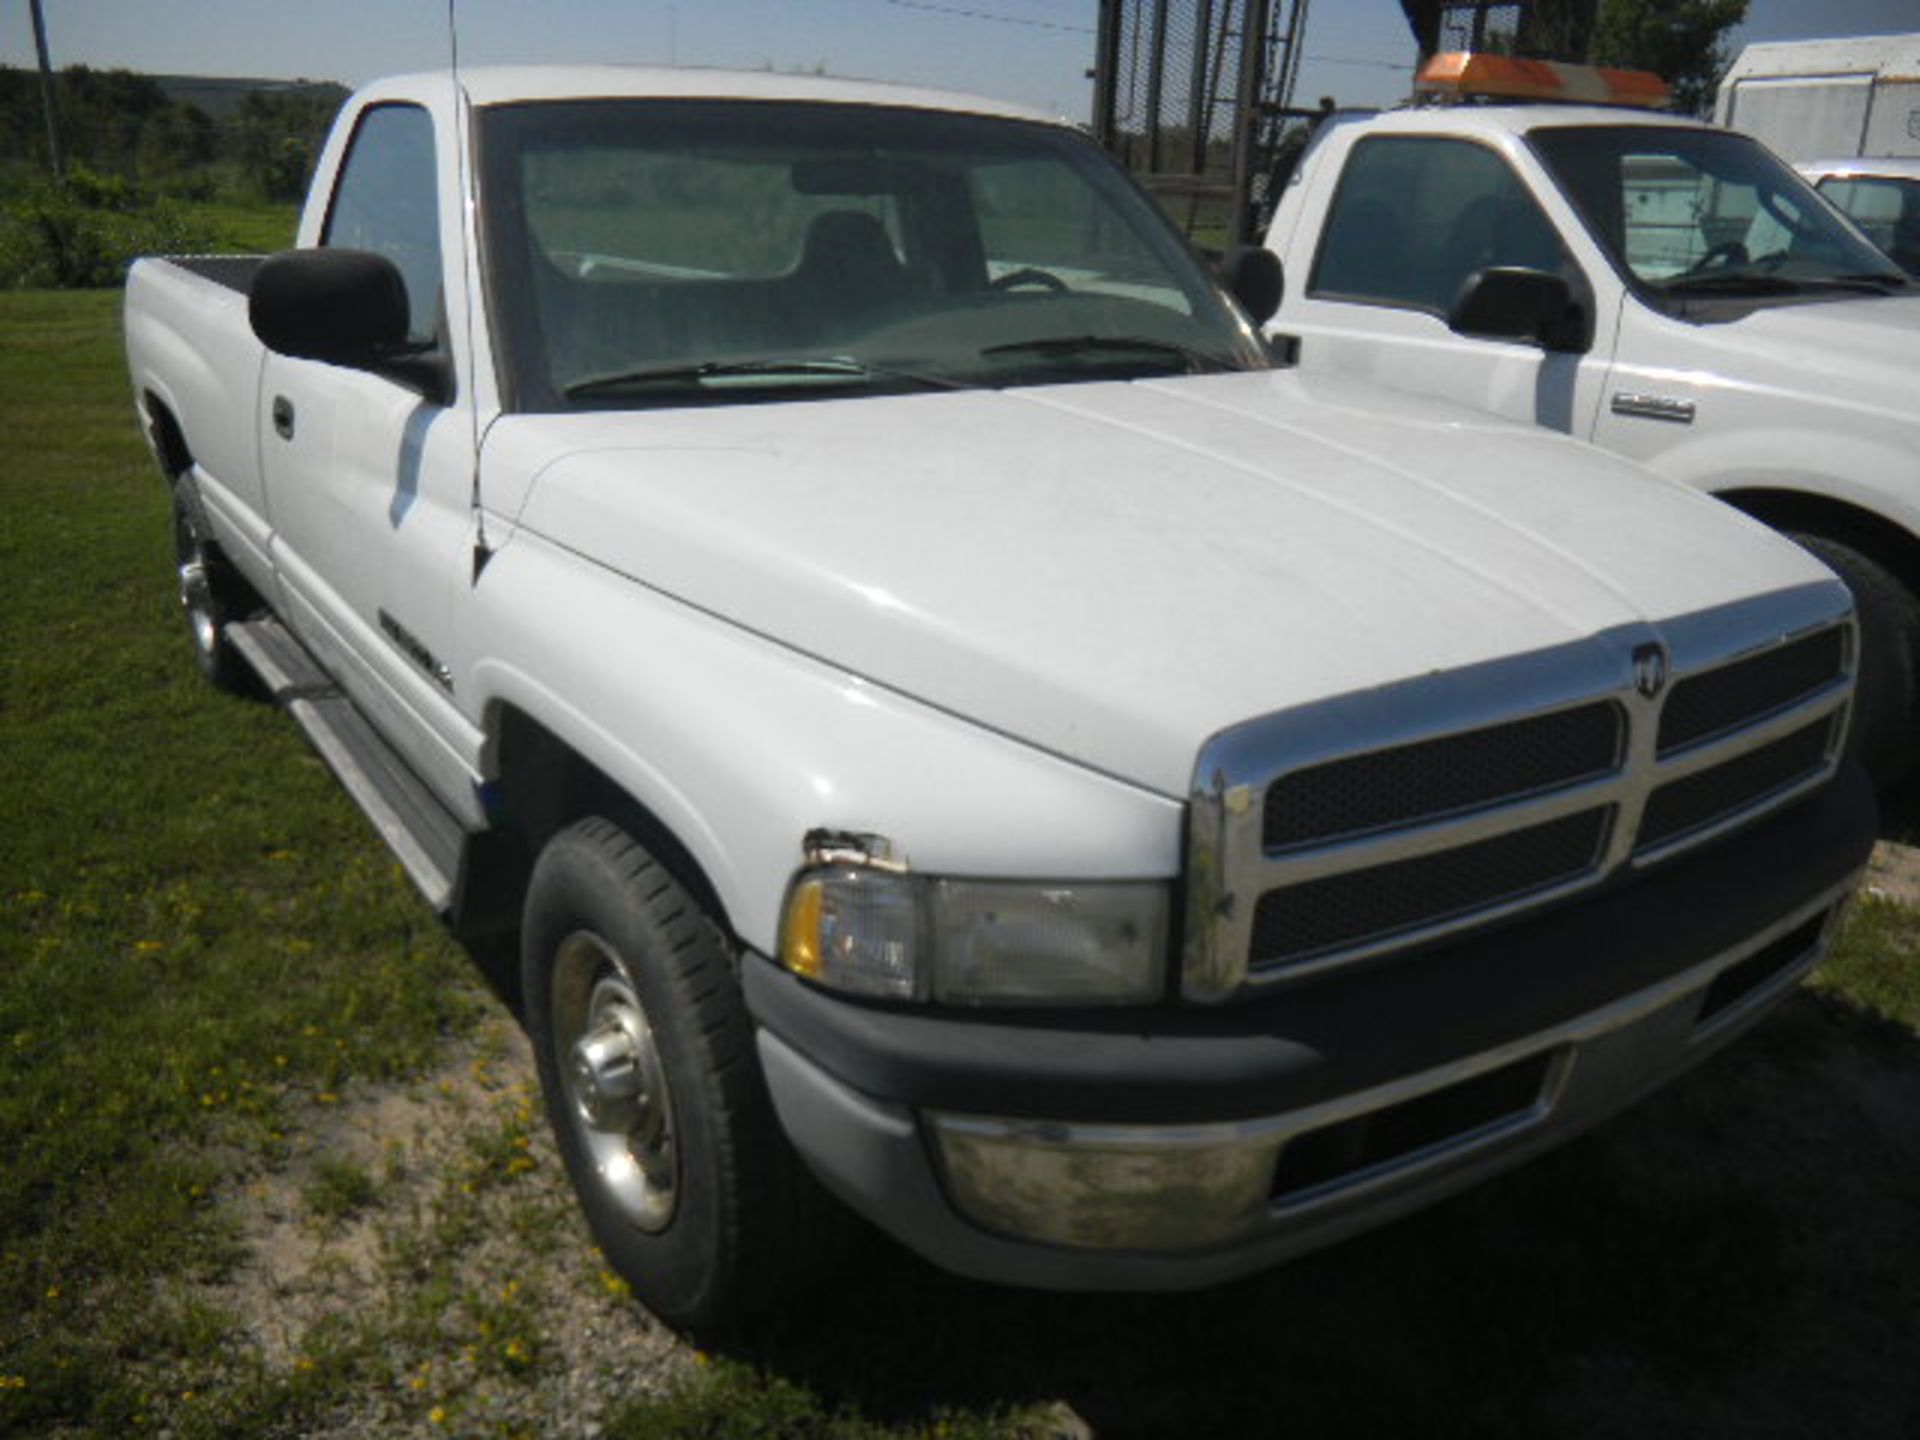 2000 Dodge Ram 2500 White Pickup w/Diamond Plate Fuel Tanks - Asset I.D.#482 - Last of Vin (276108) - Image 2 of 9